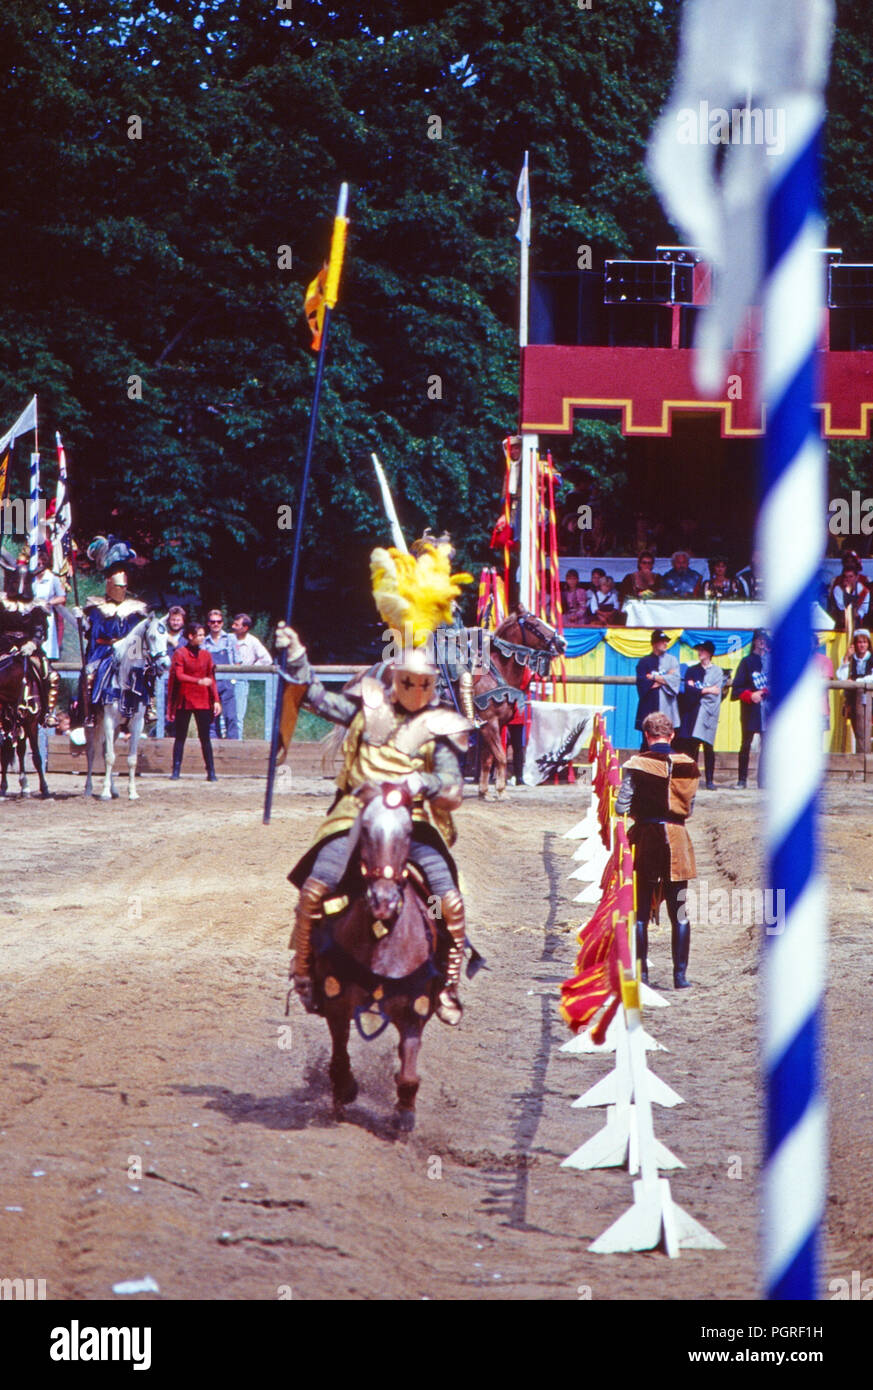 Beim Kaltenberger Ritterturnier Zweikampf auf Schloss Hof, Allemagne 1991. Lors de la joute Kaltenberg knights festival au Château de Hof, Allemagne 1991. Banque D'Images